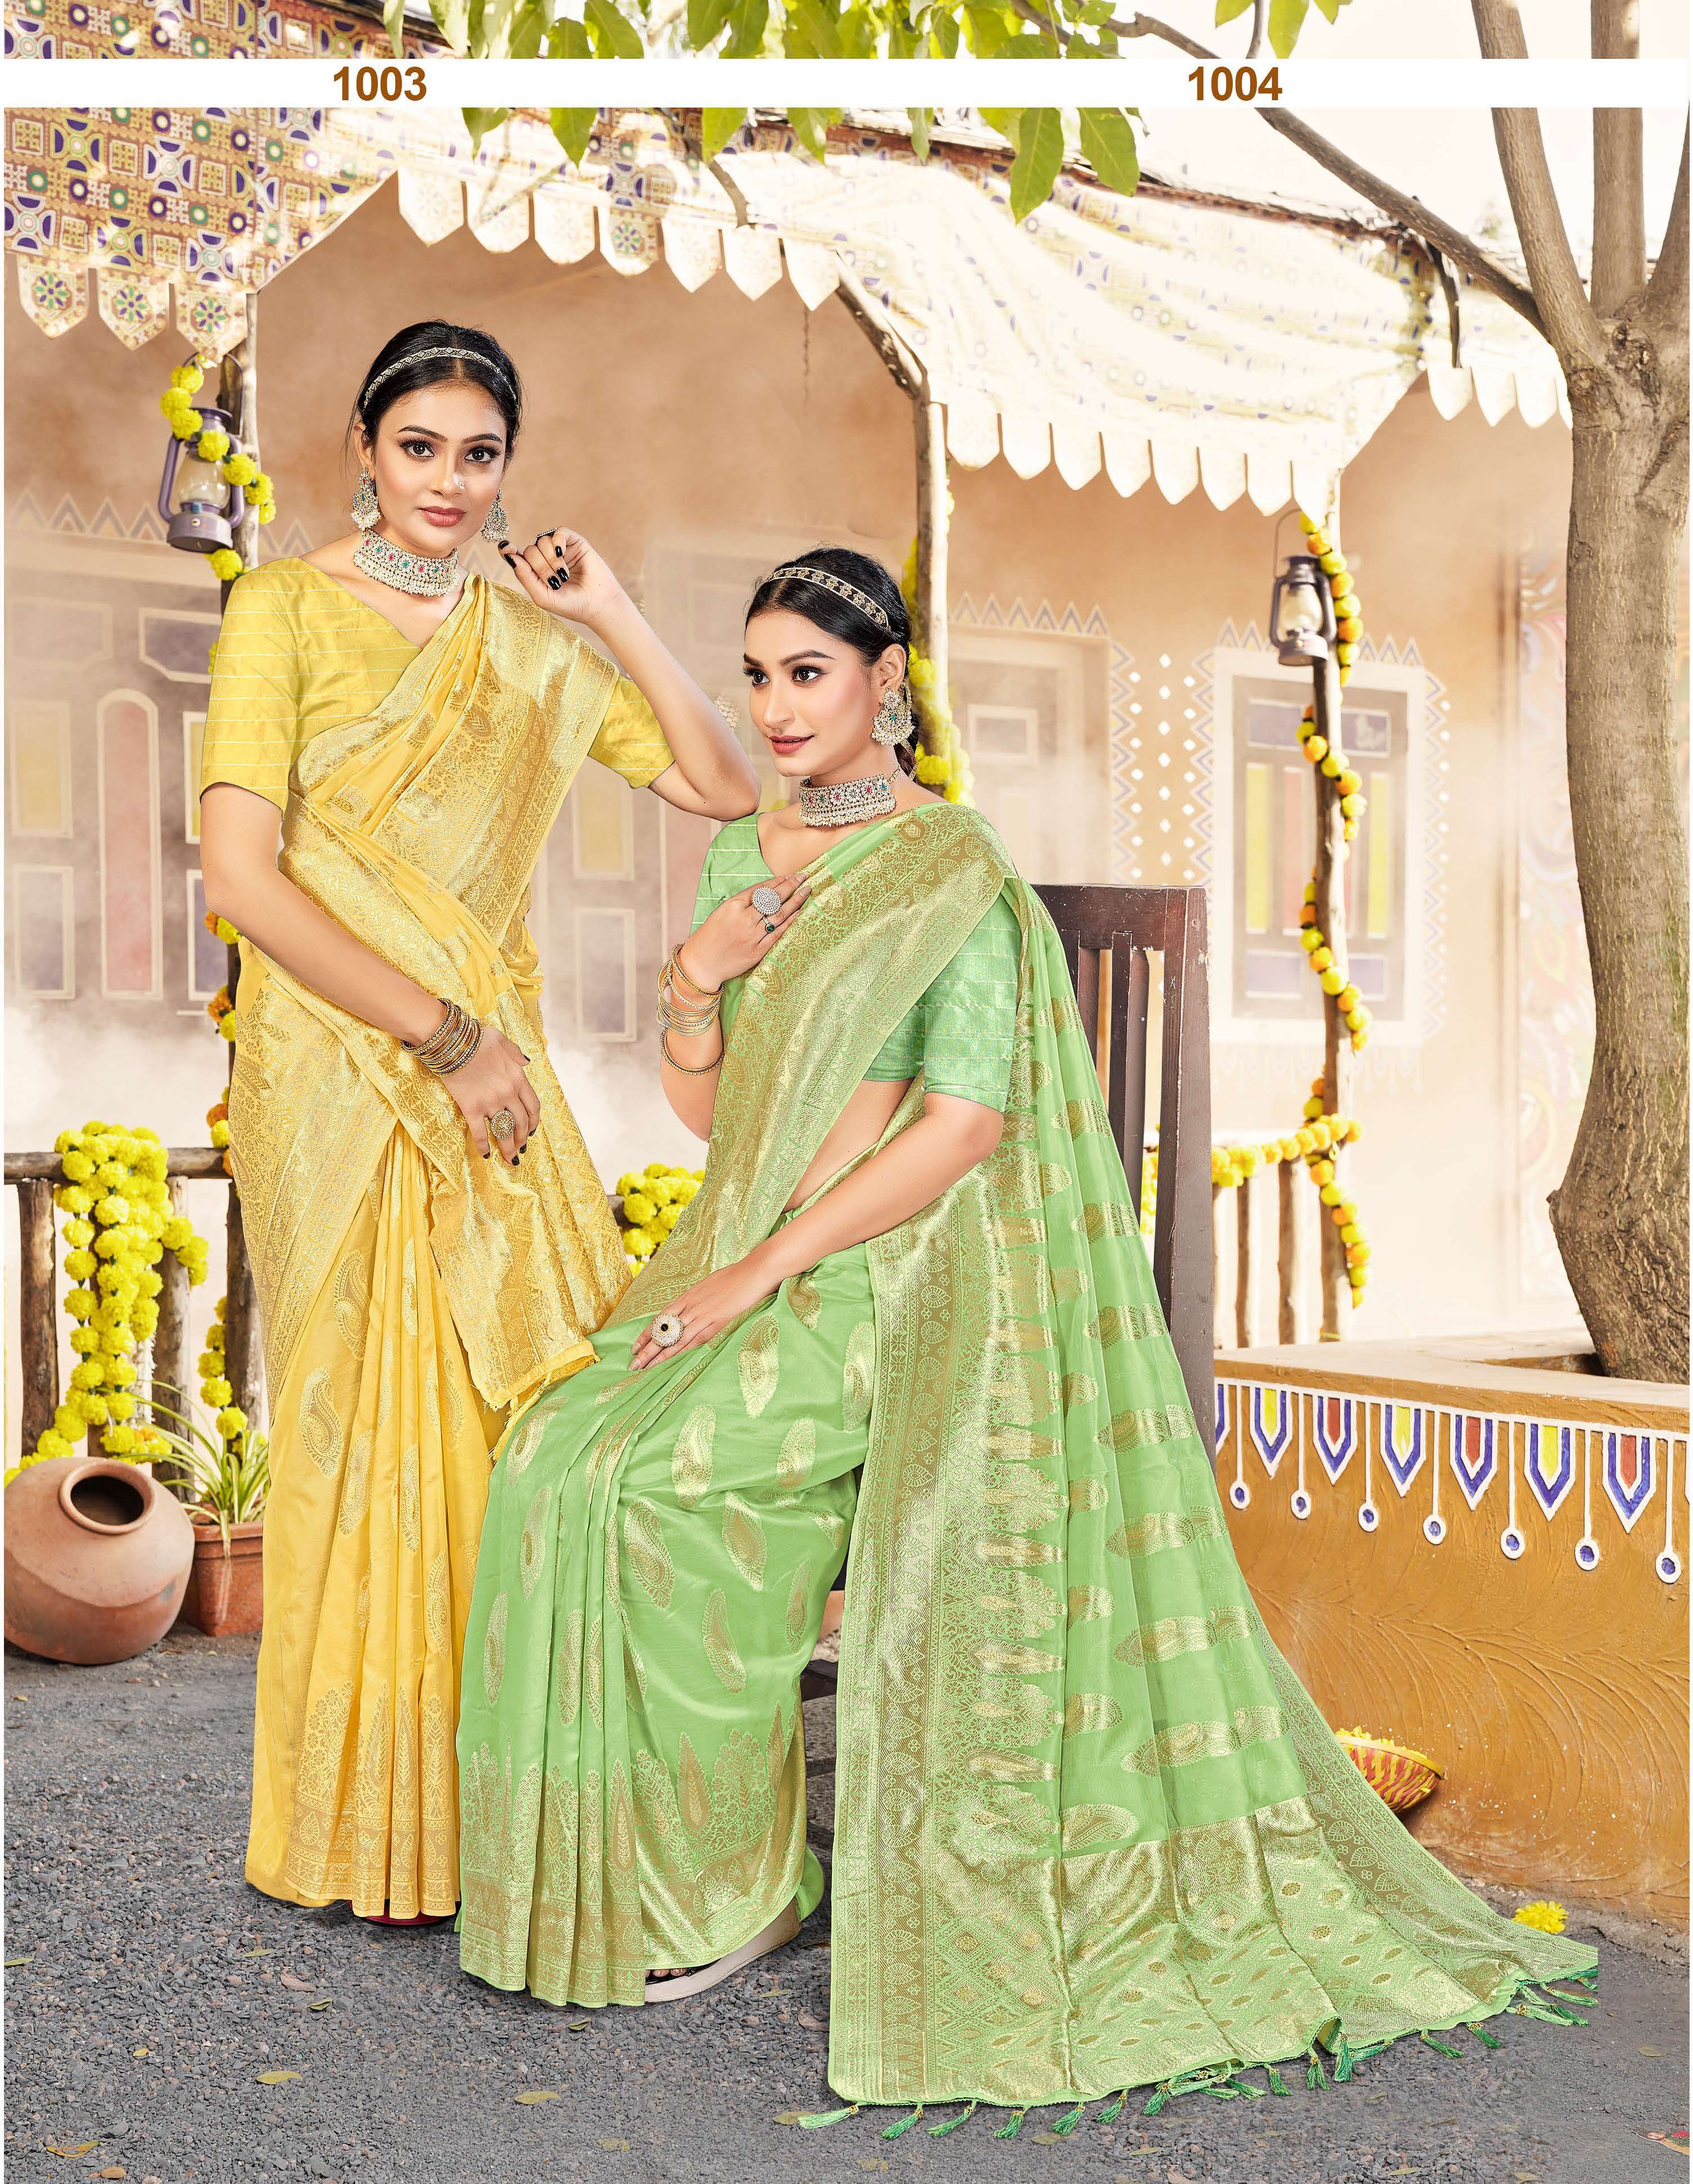 Saroj  Mayshaa Vol - 1 Soft silk Saree Wholesale catalog    